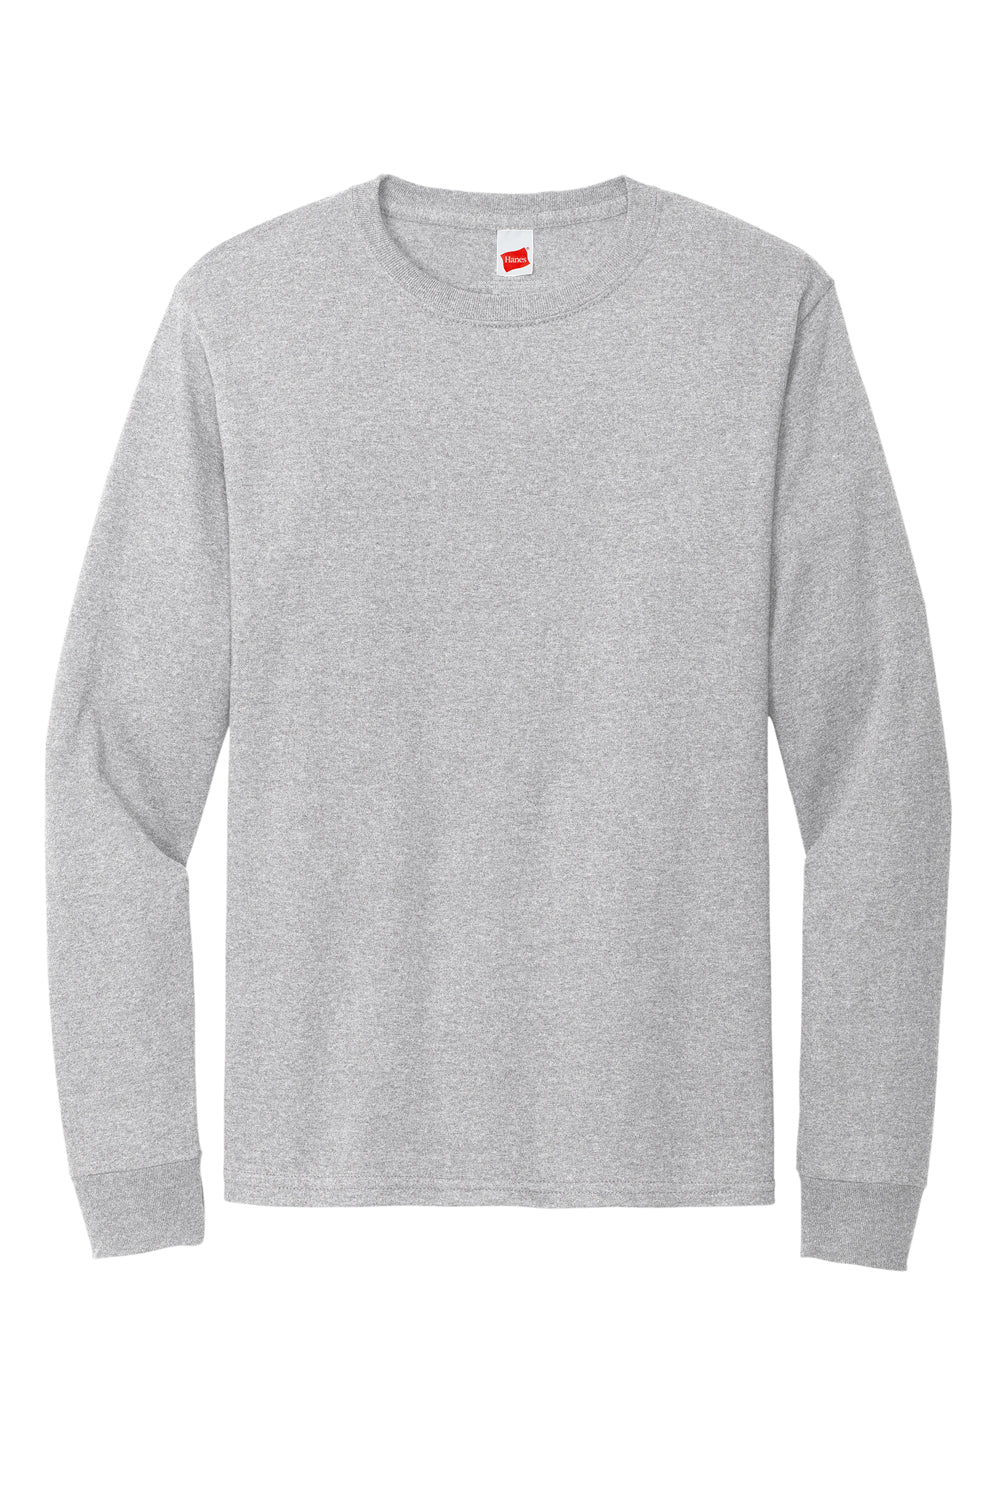 Hanes 5286 Mens ComfortSoft Long Sleeve Crewneck T-Shirt Ash Grey Flat Front